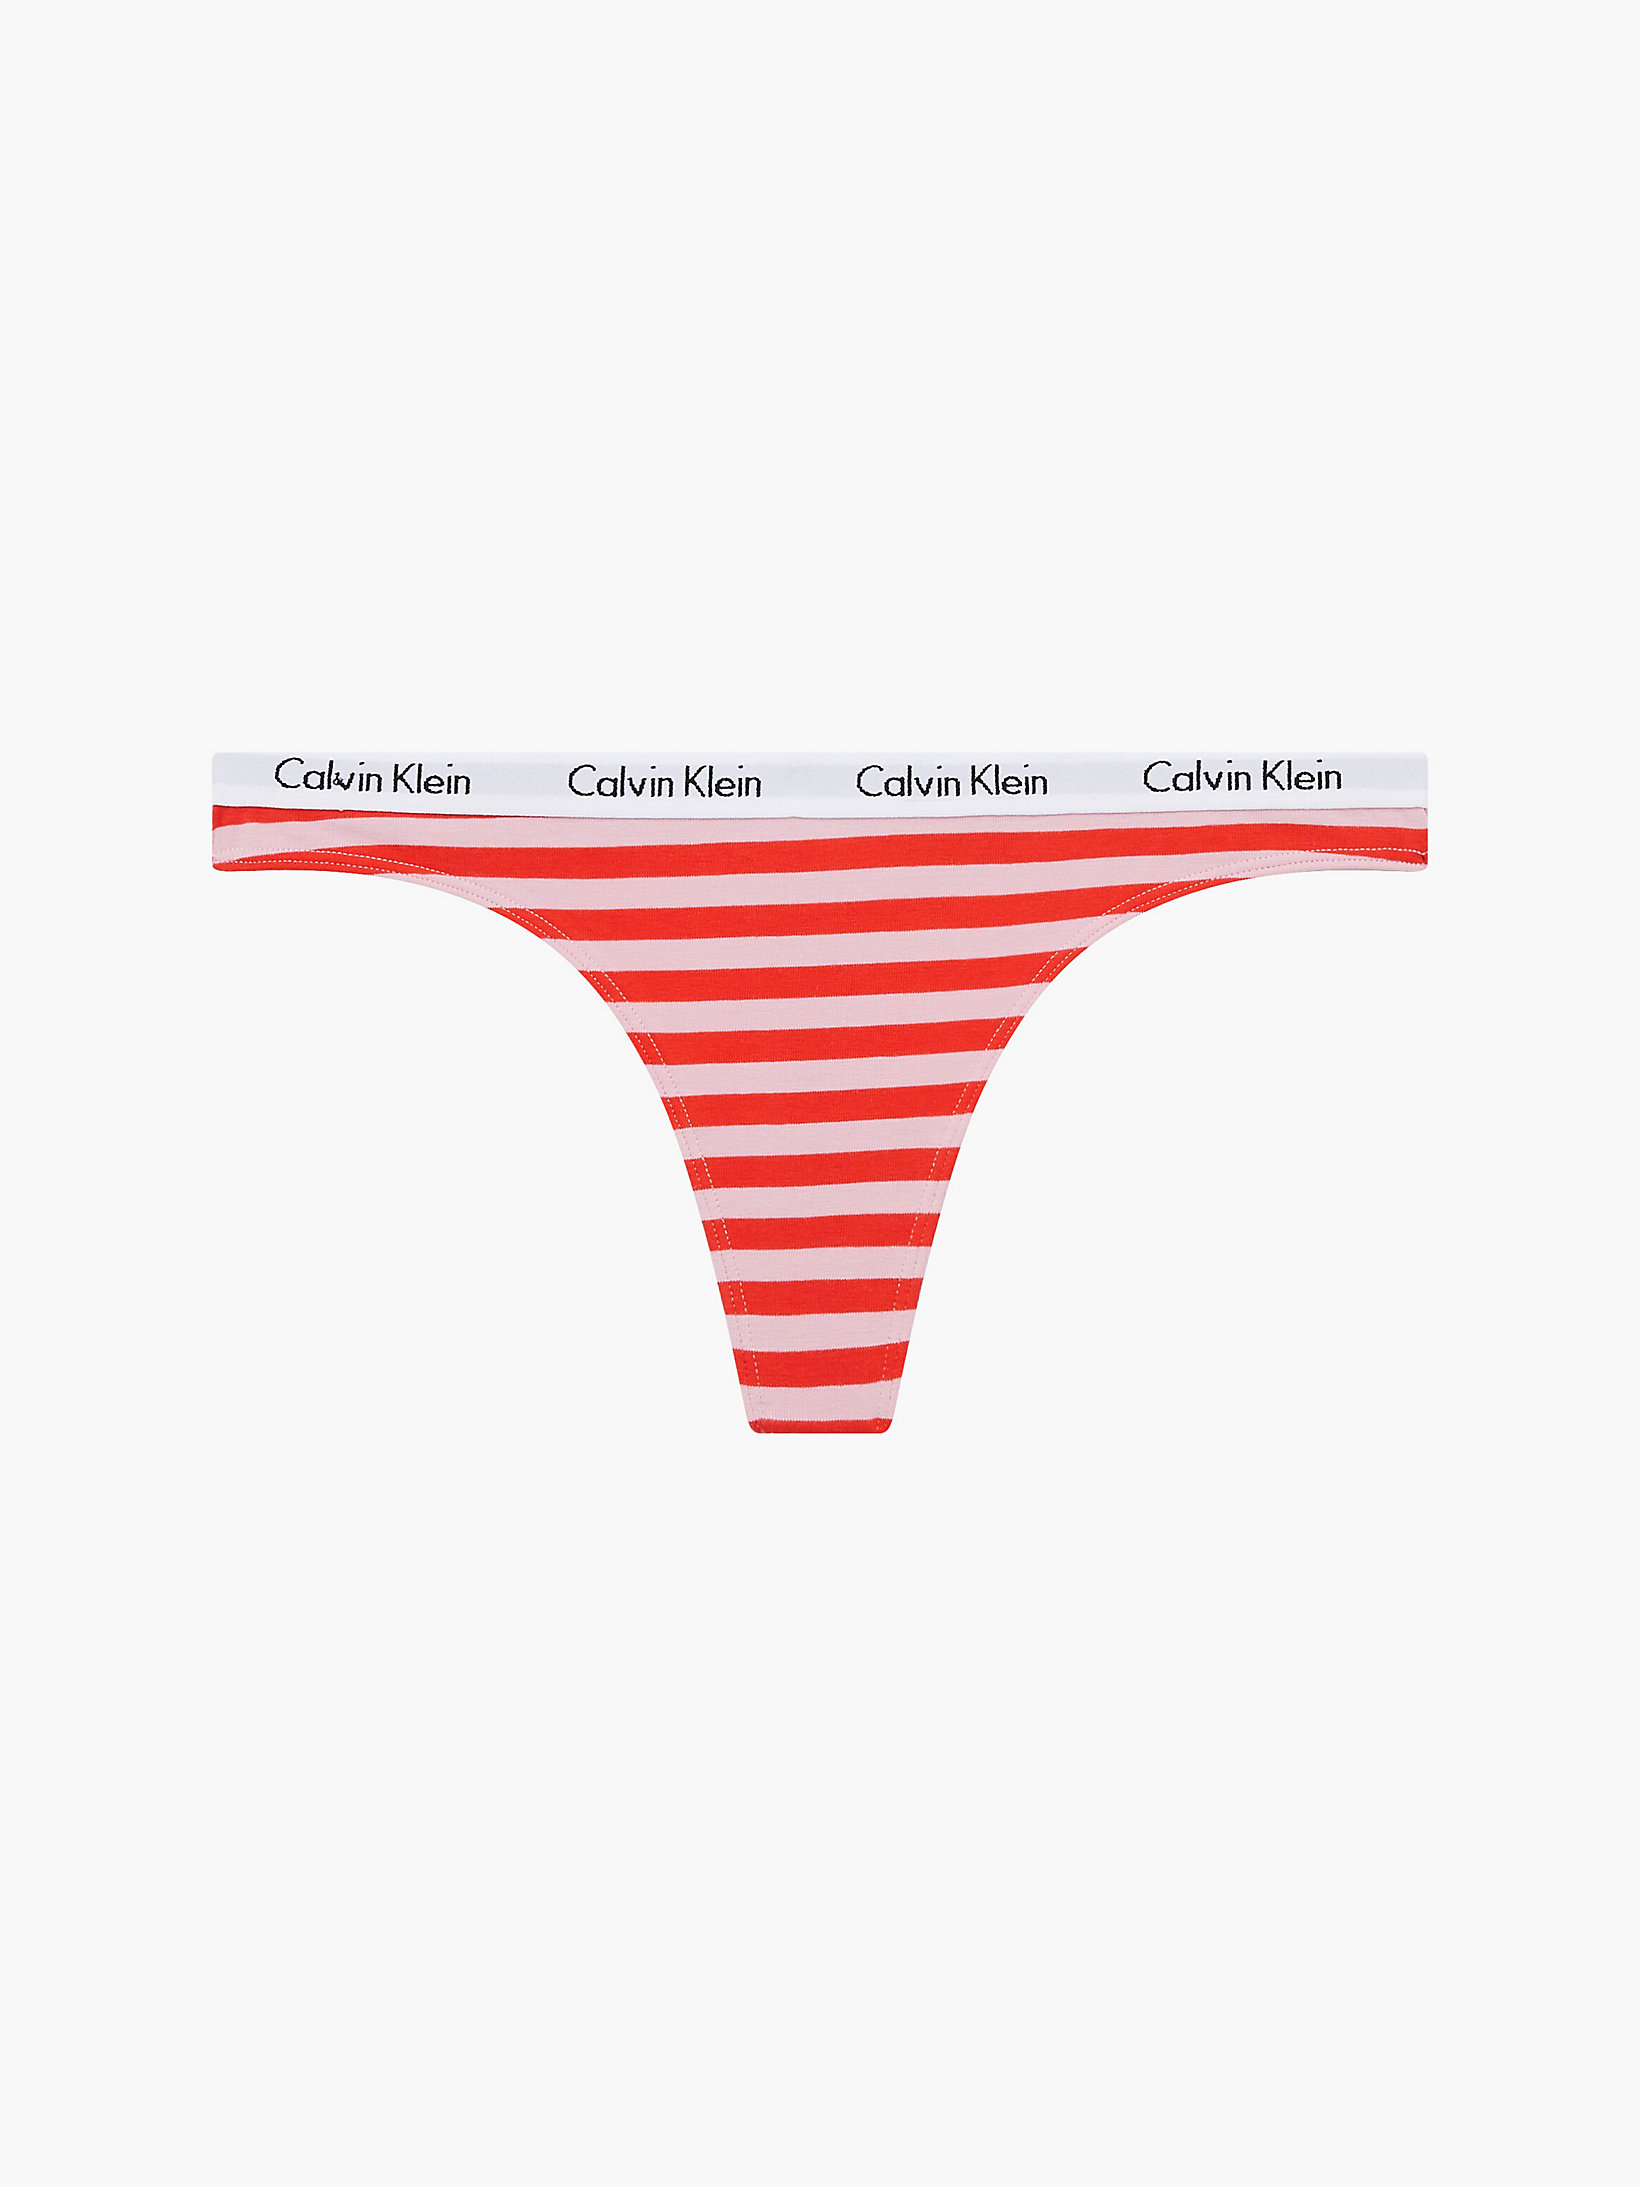 String - Carousel > Rainer Stripe_pink Shell > undefined femmes > Calvin Klein